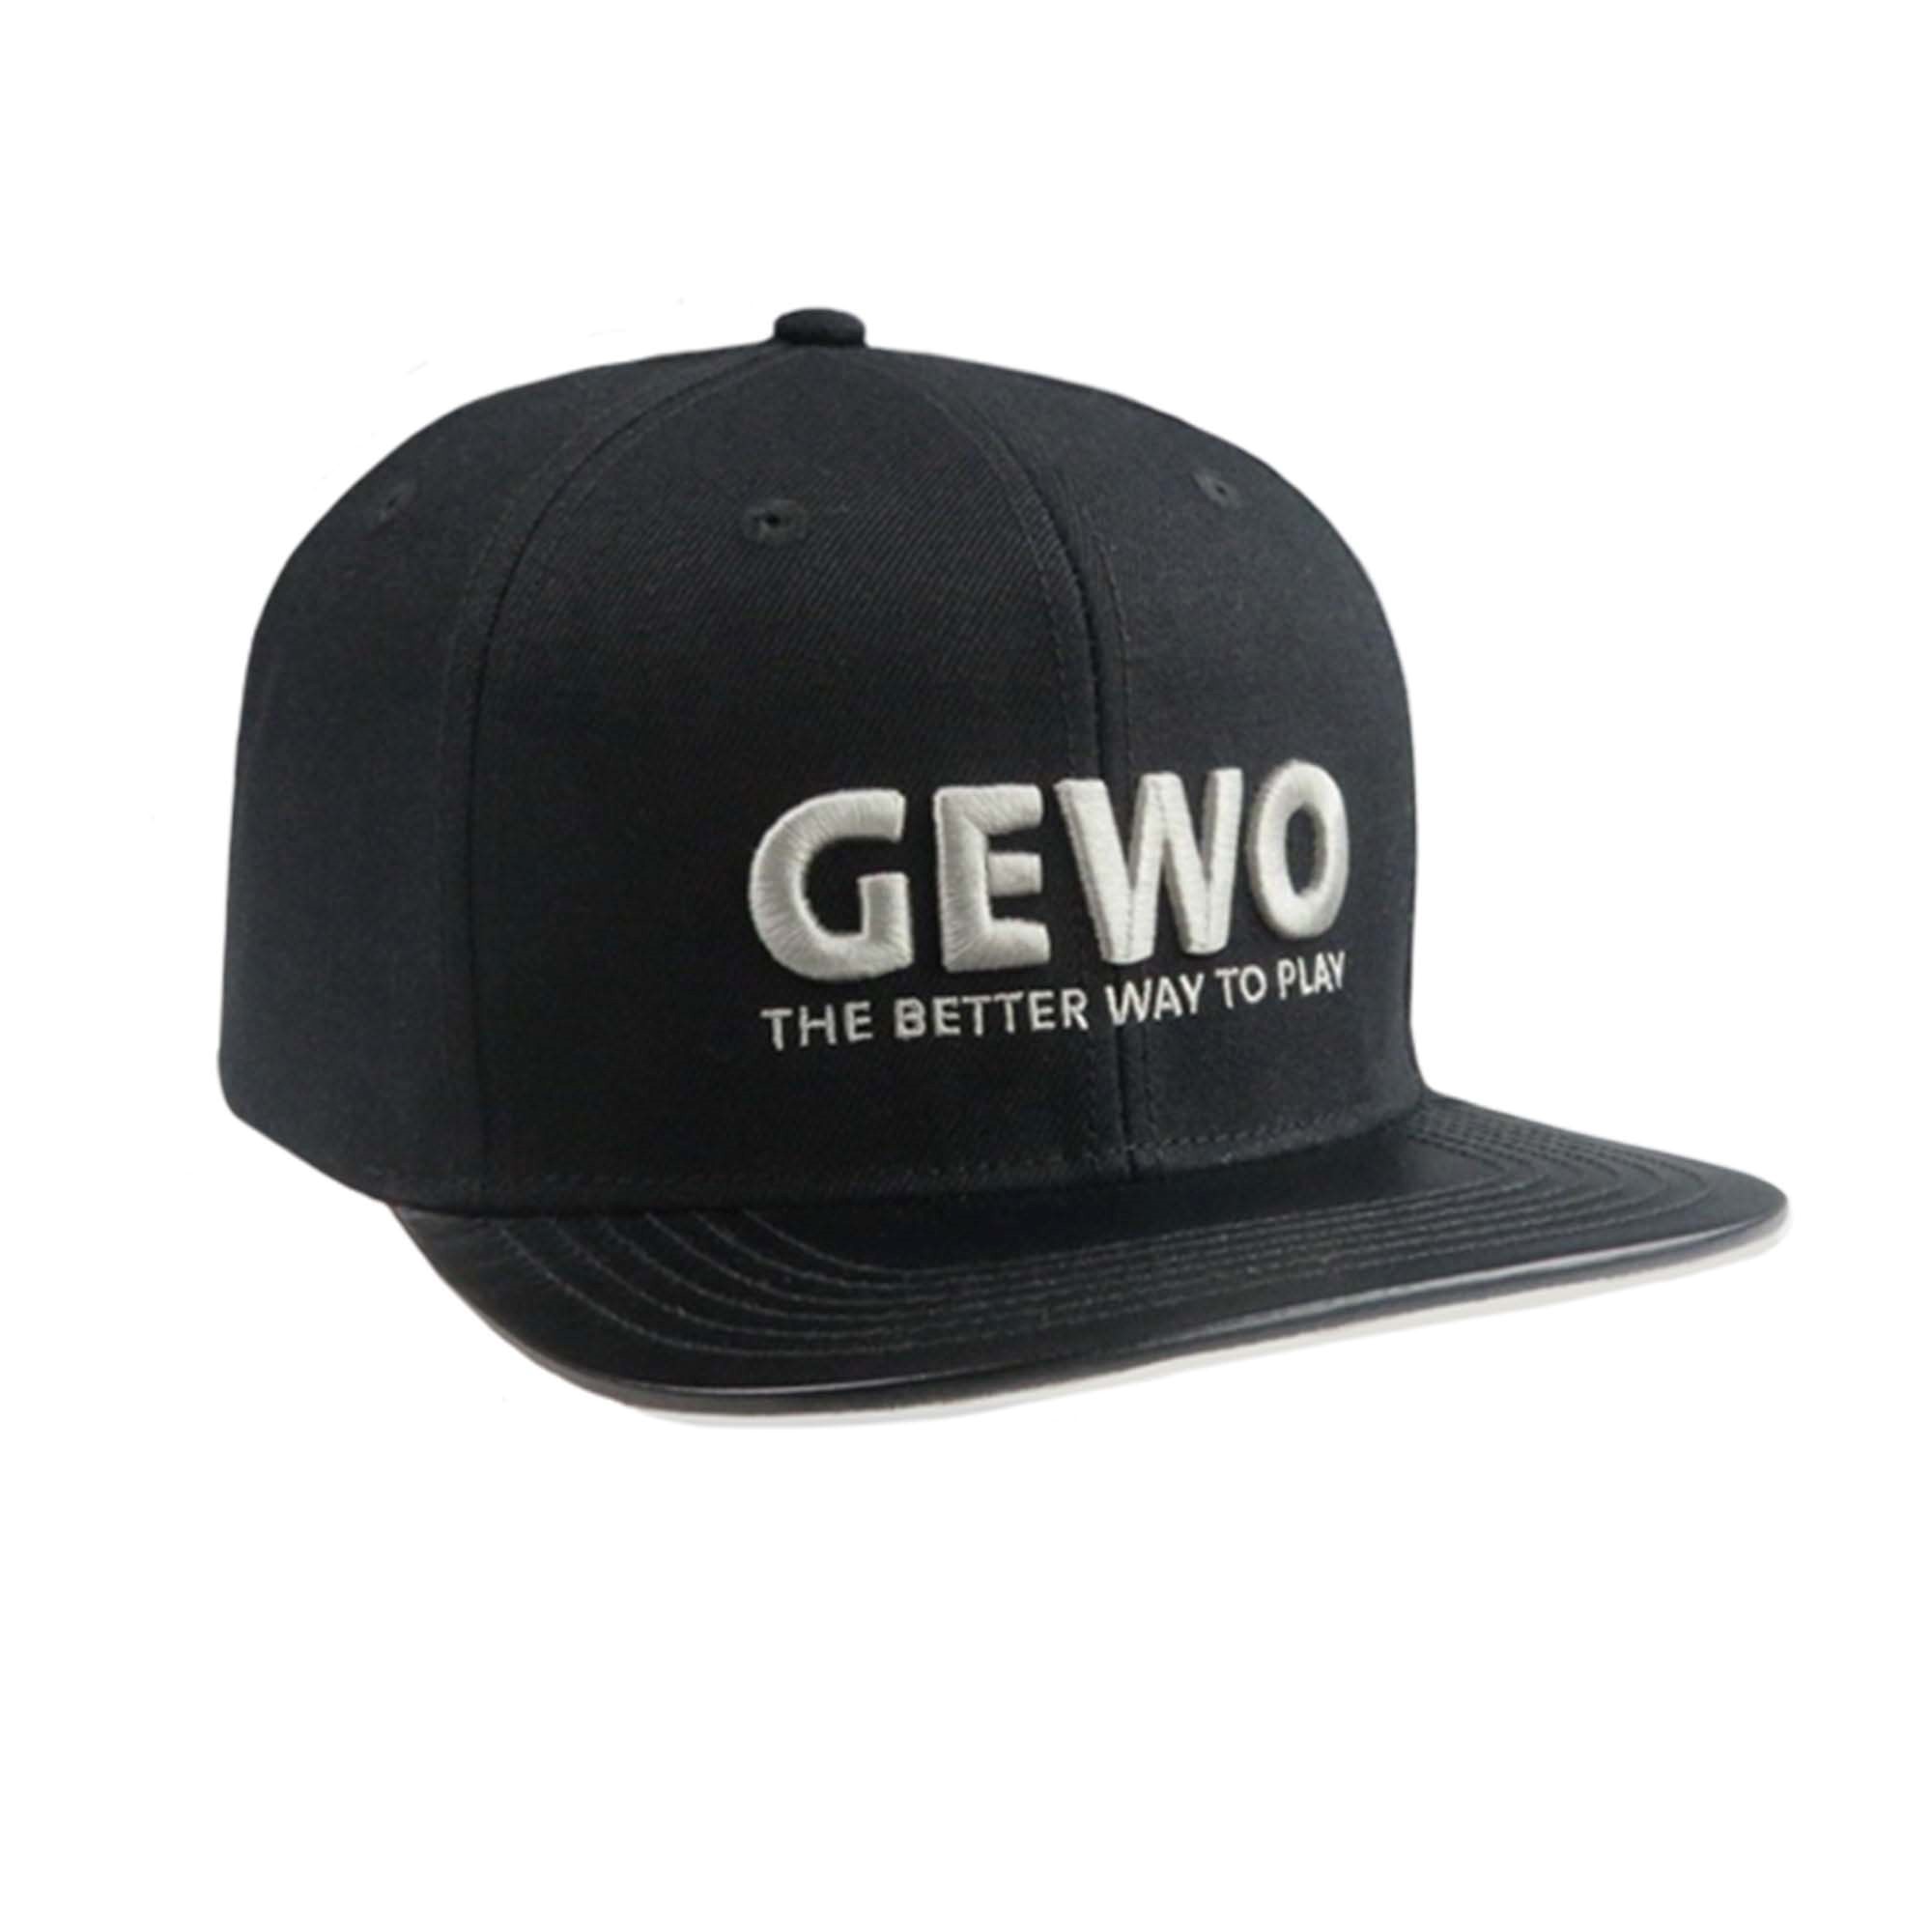 GEWO Snapback-Cap schwarz/weiß